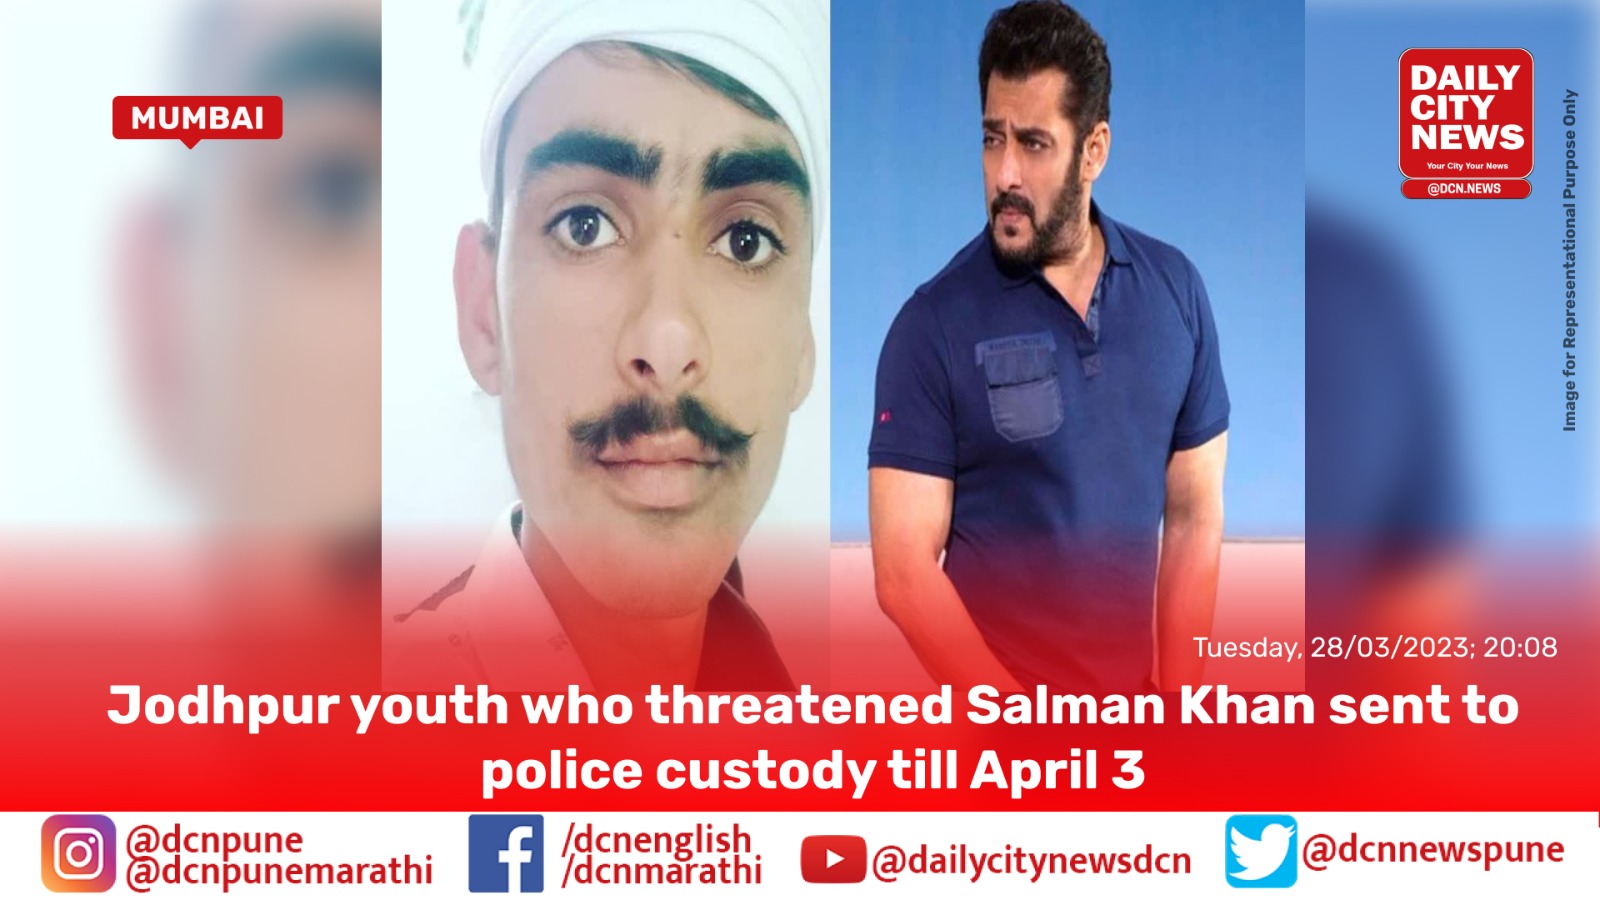 Jodhpur youth who threatened Salman Khan sent to police custody till April 3